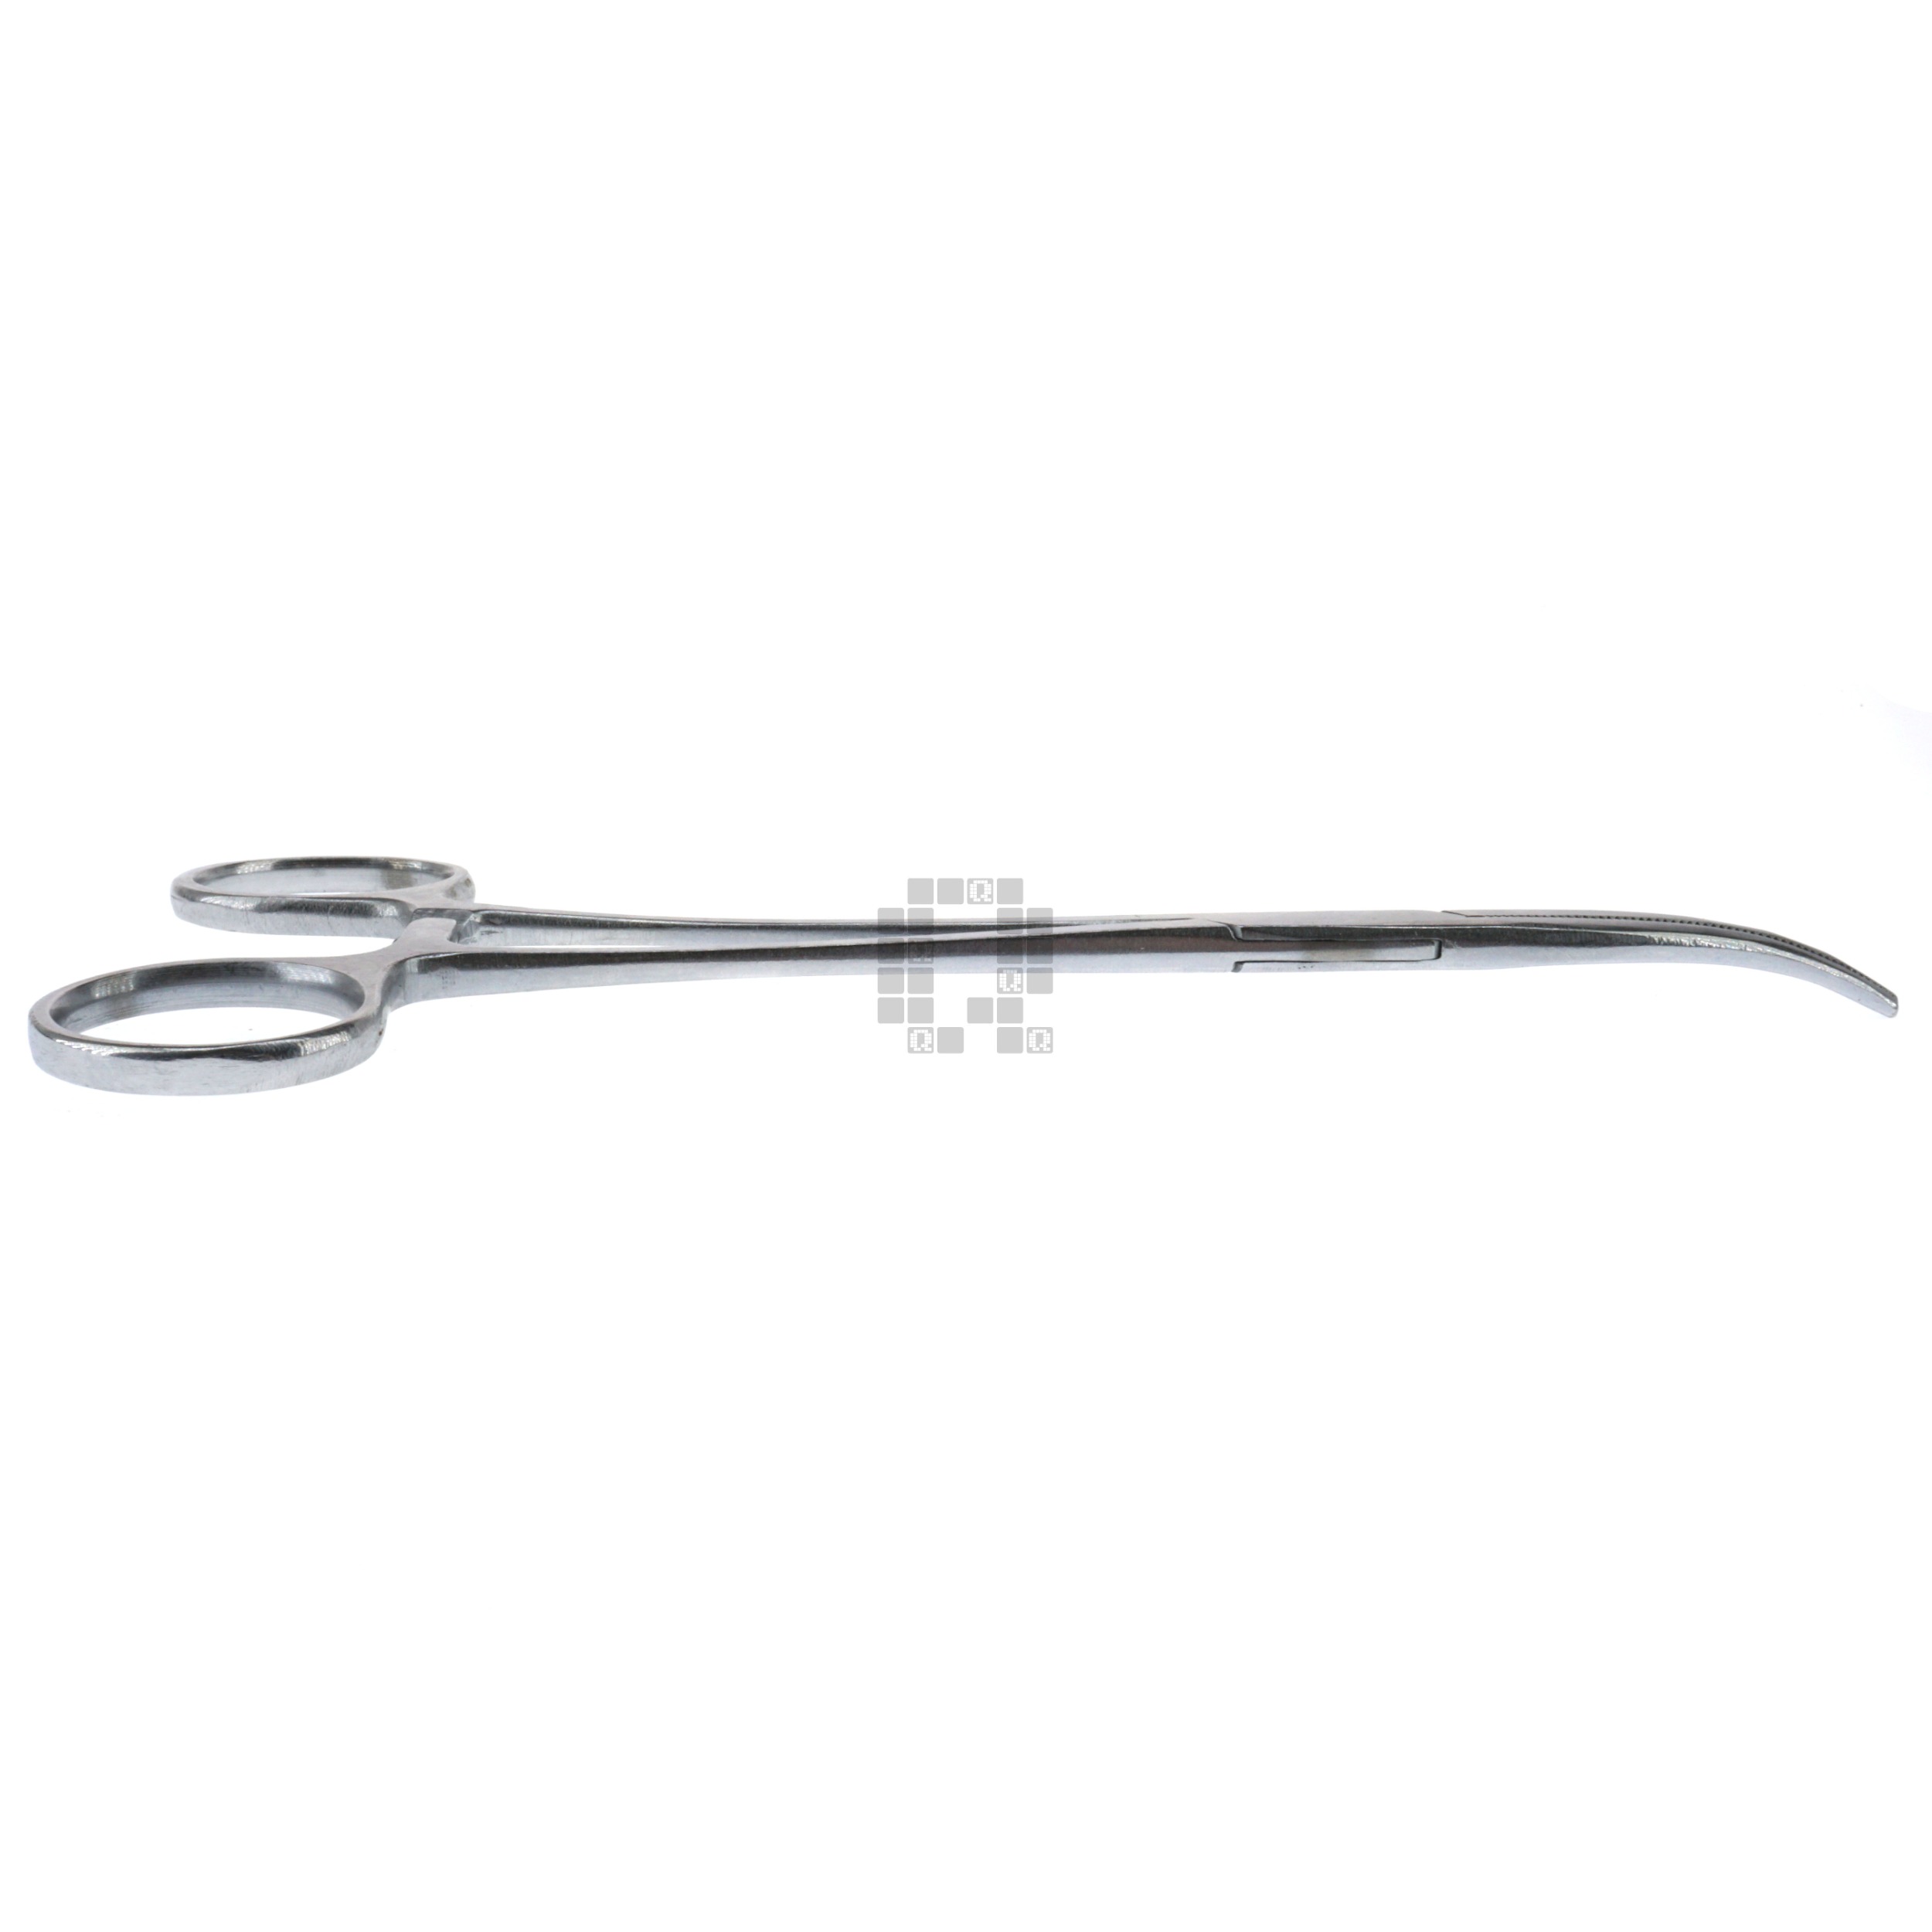 Locking Curved Tip Stainless Steel Forceps Hemostatic Clamp, 18cm, 0178-18CU